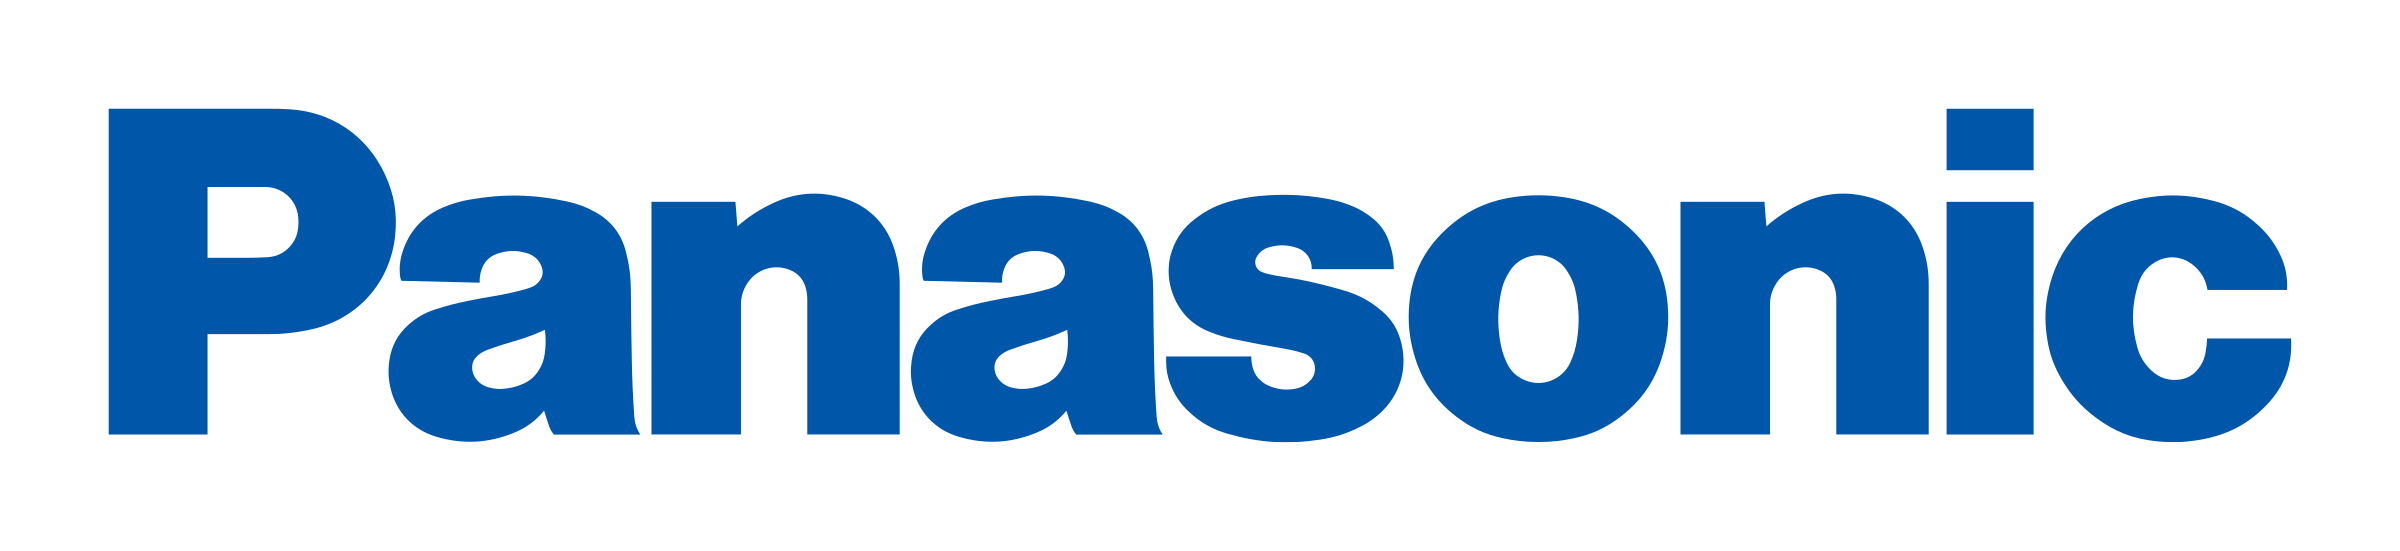 Panasonic Logo PNG - 176745